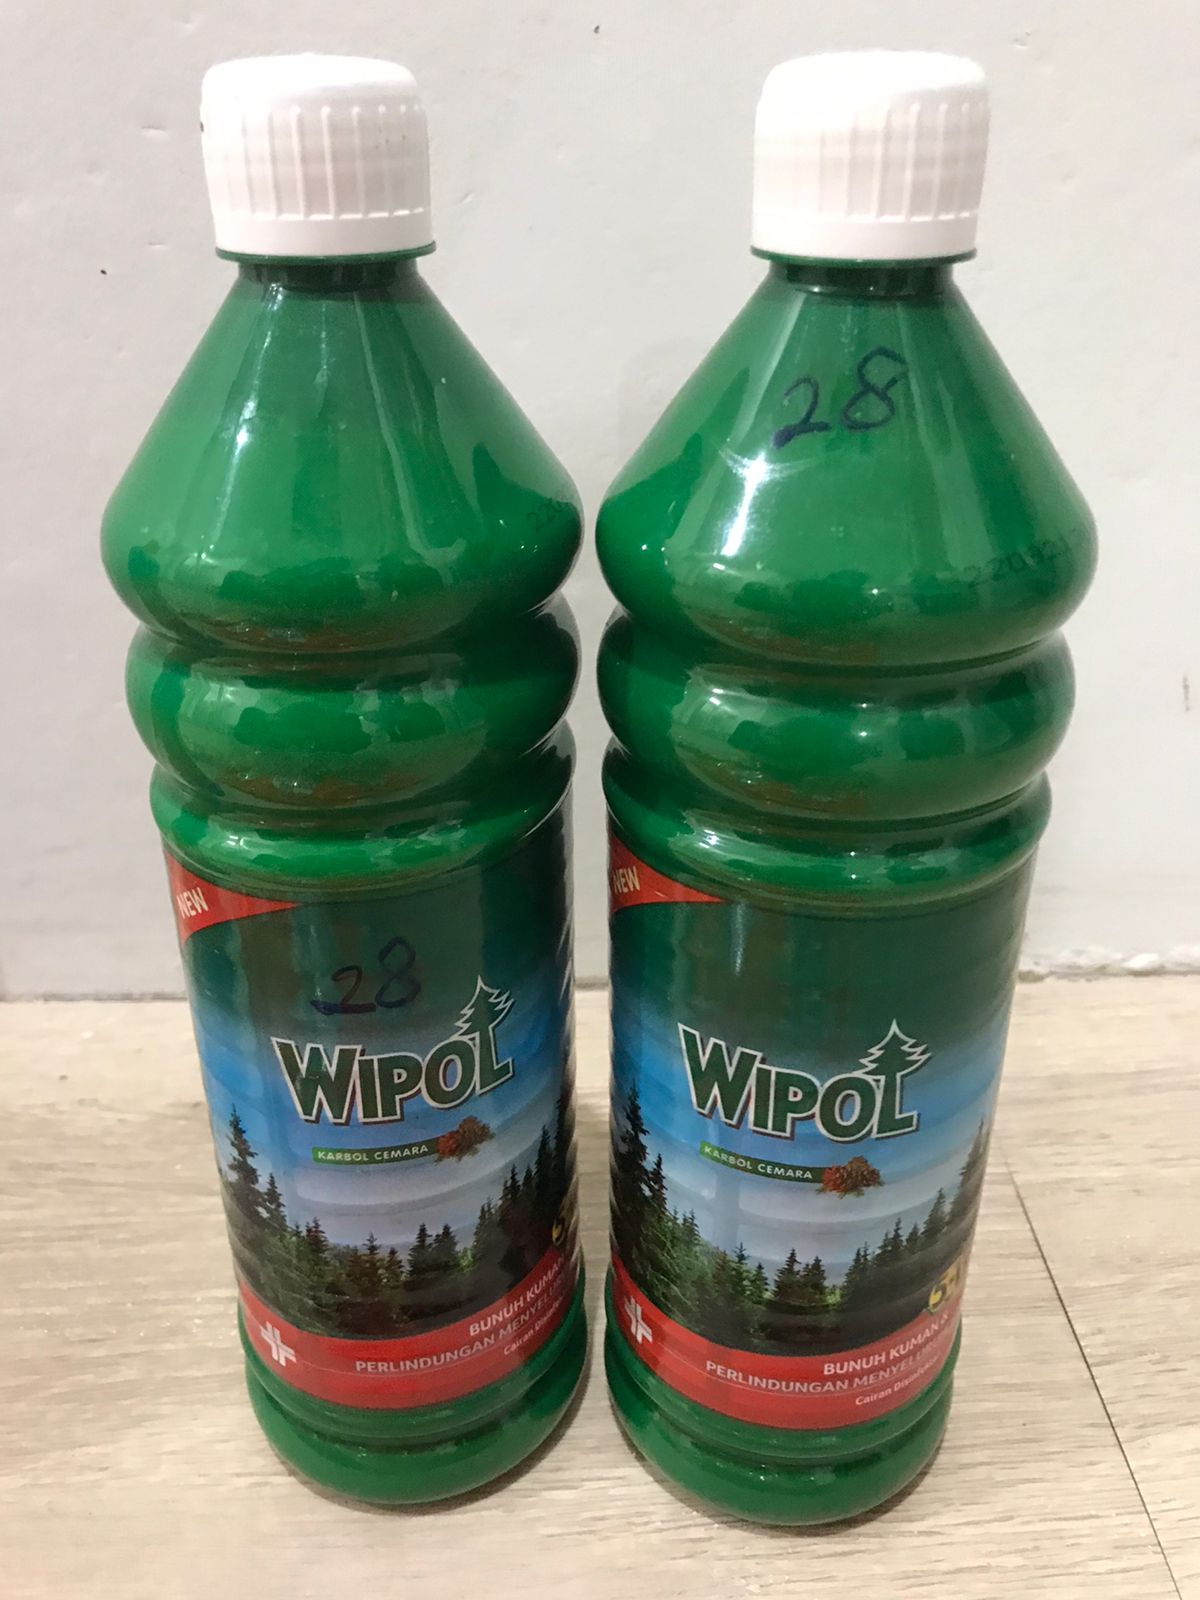 Wipol Classic Pine Botol 750Ml